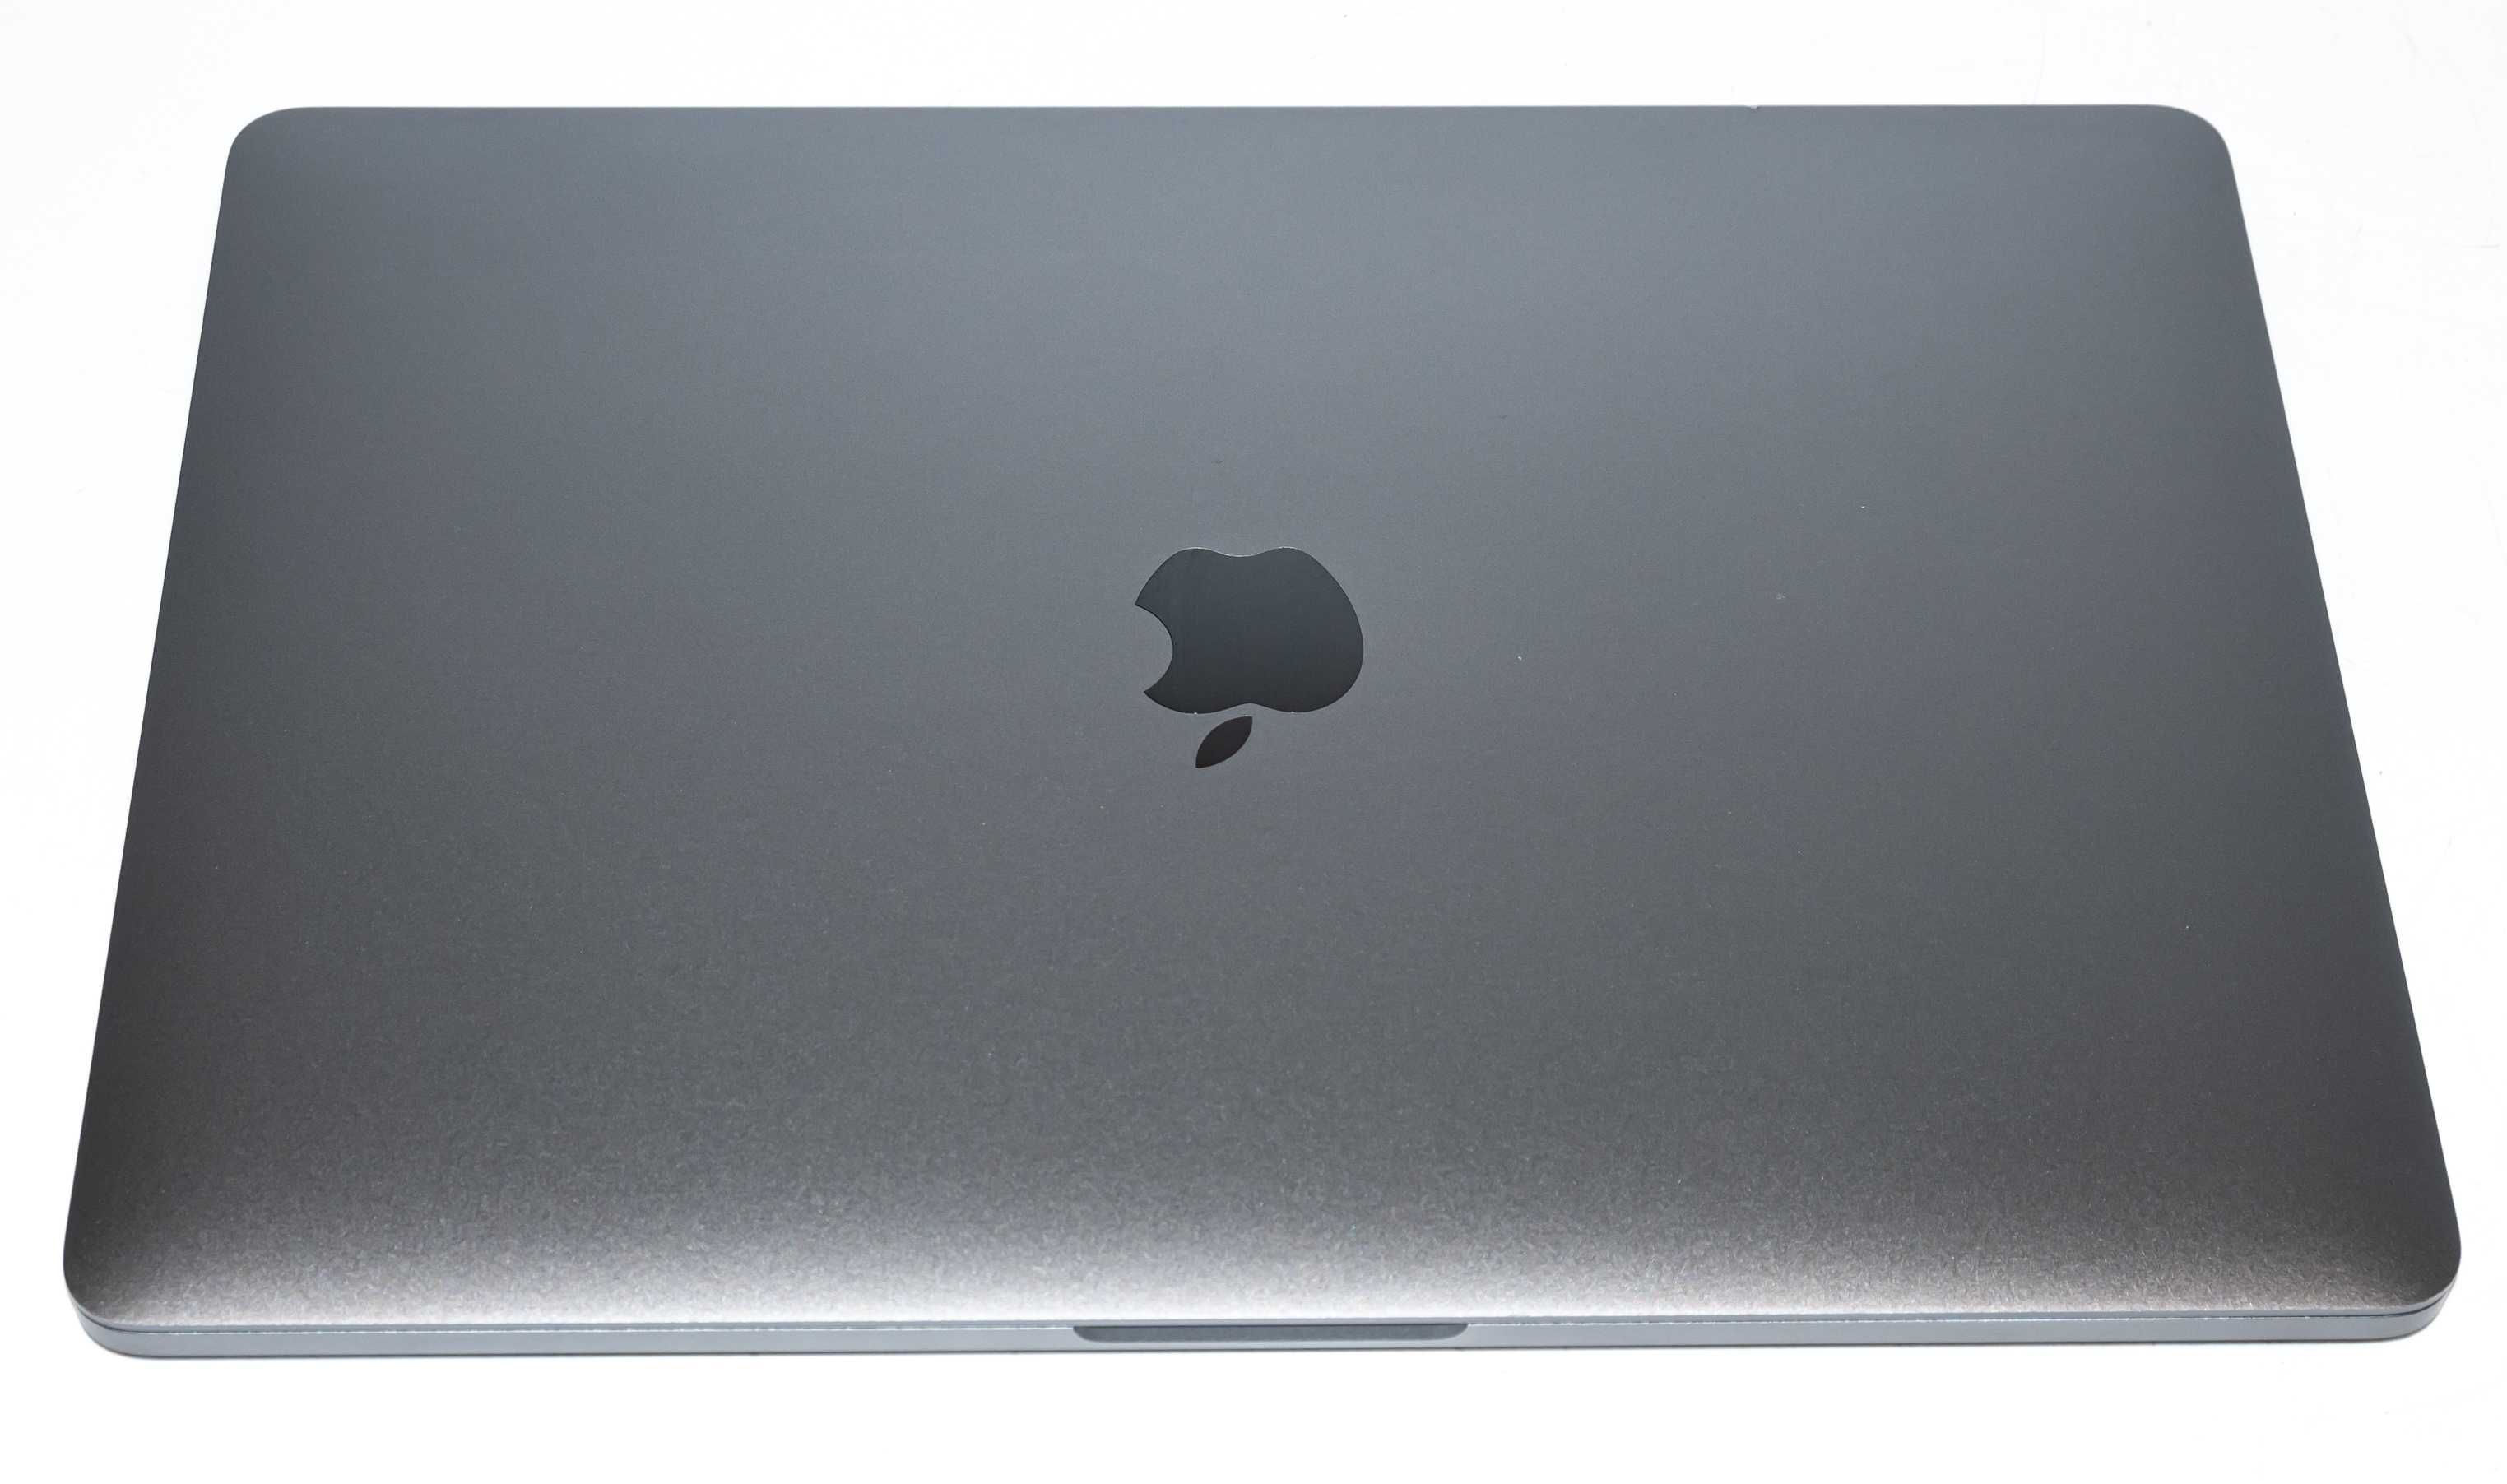 MacBook Pro 13 2020 i7 1.7GHz 16GB 256GB SSD Iris